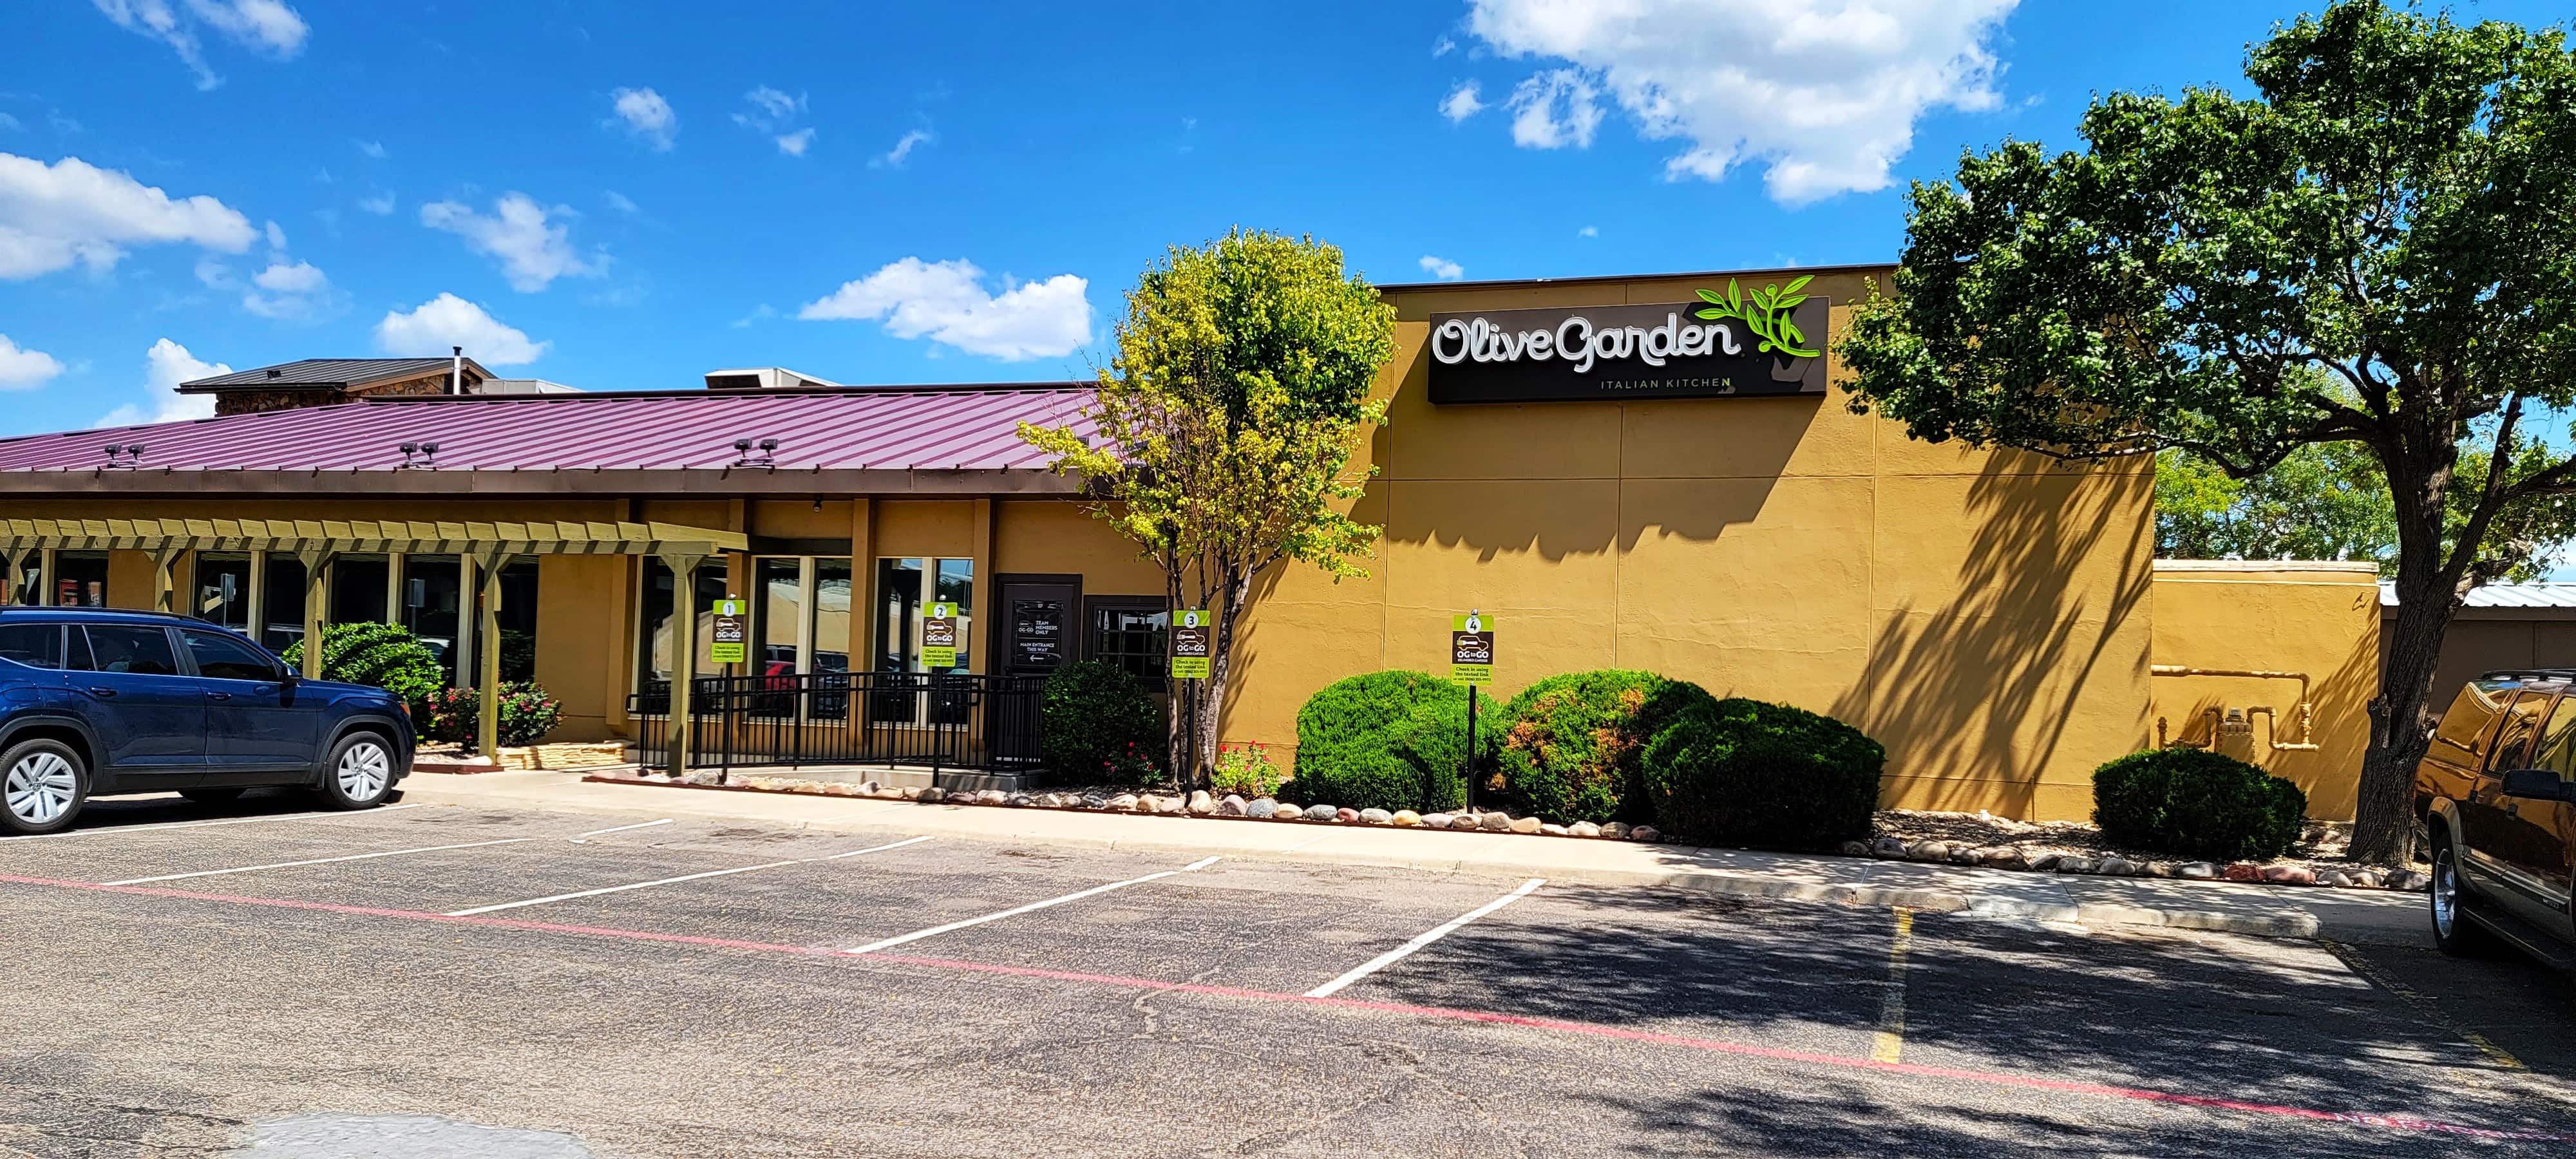 Olive Garden Italian Restaurant - Amarillo (TX 79109), US, italian delivery near me